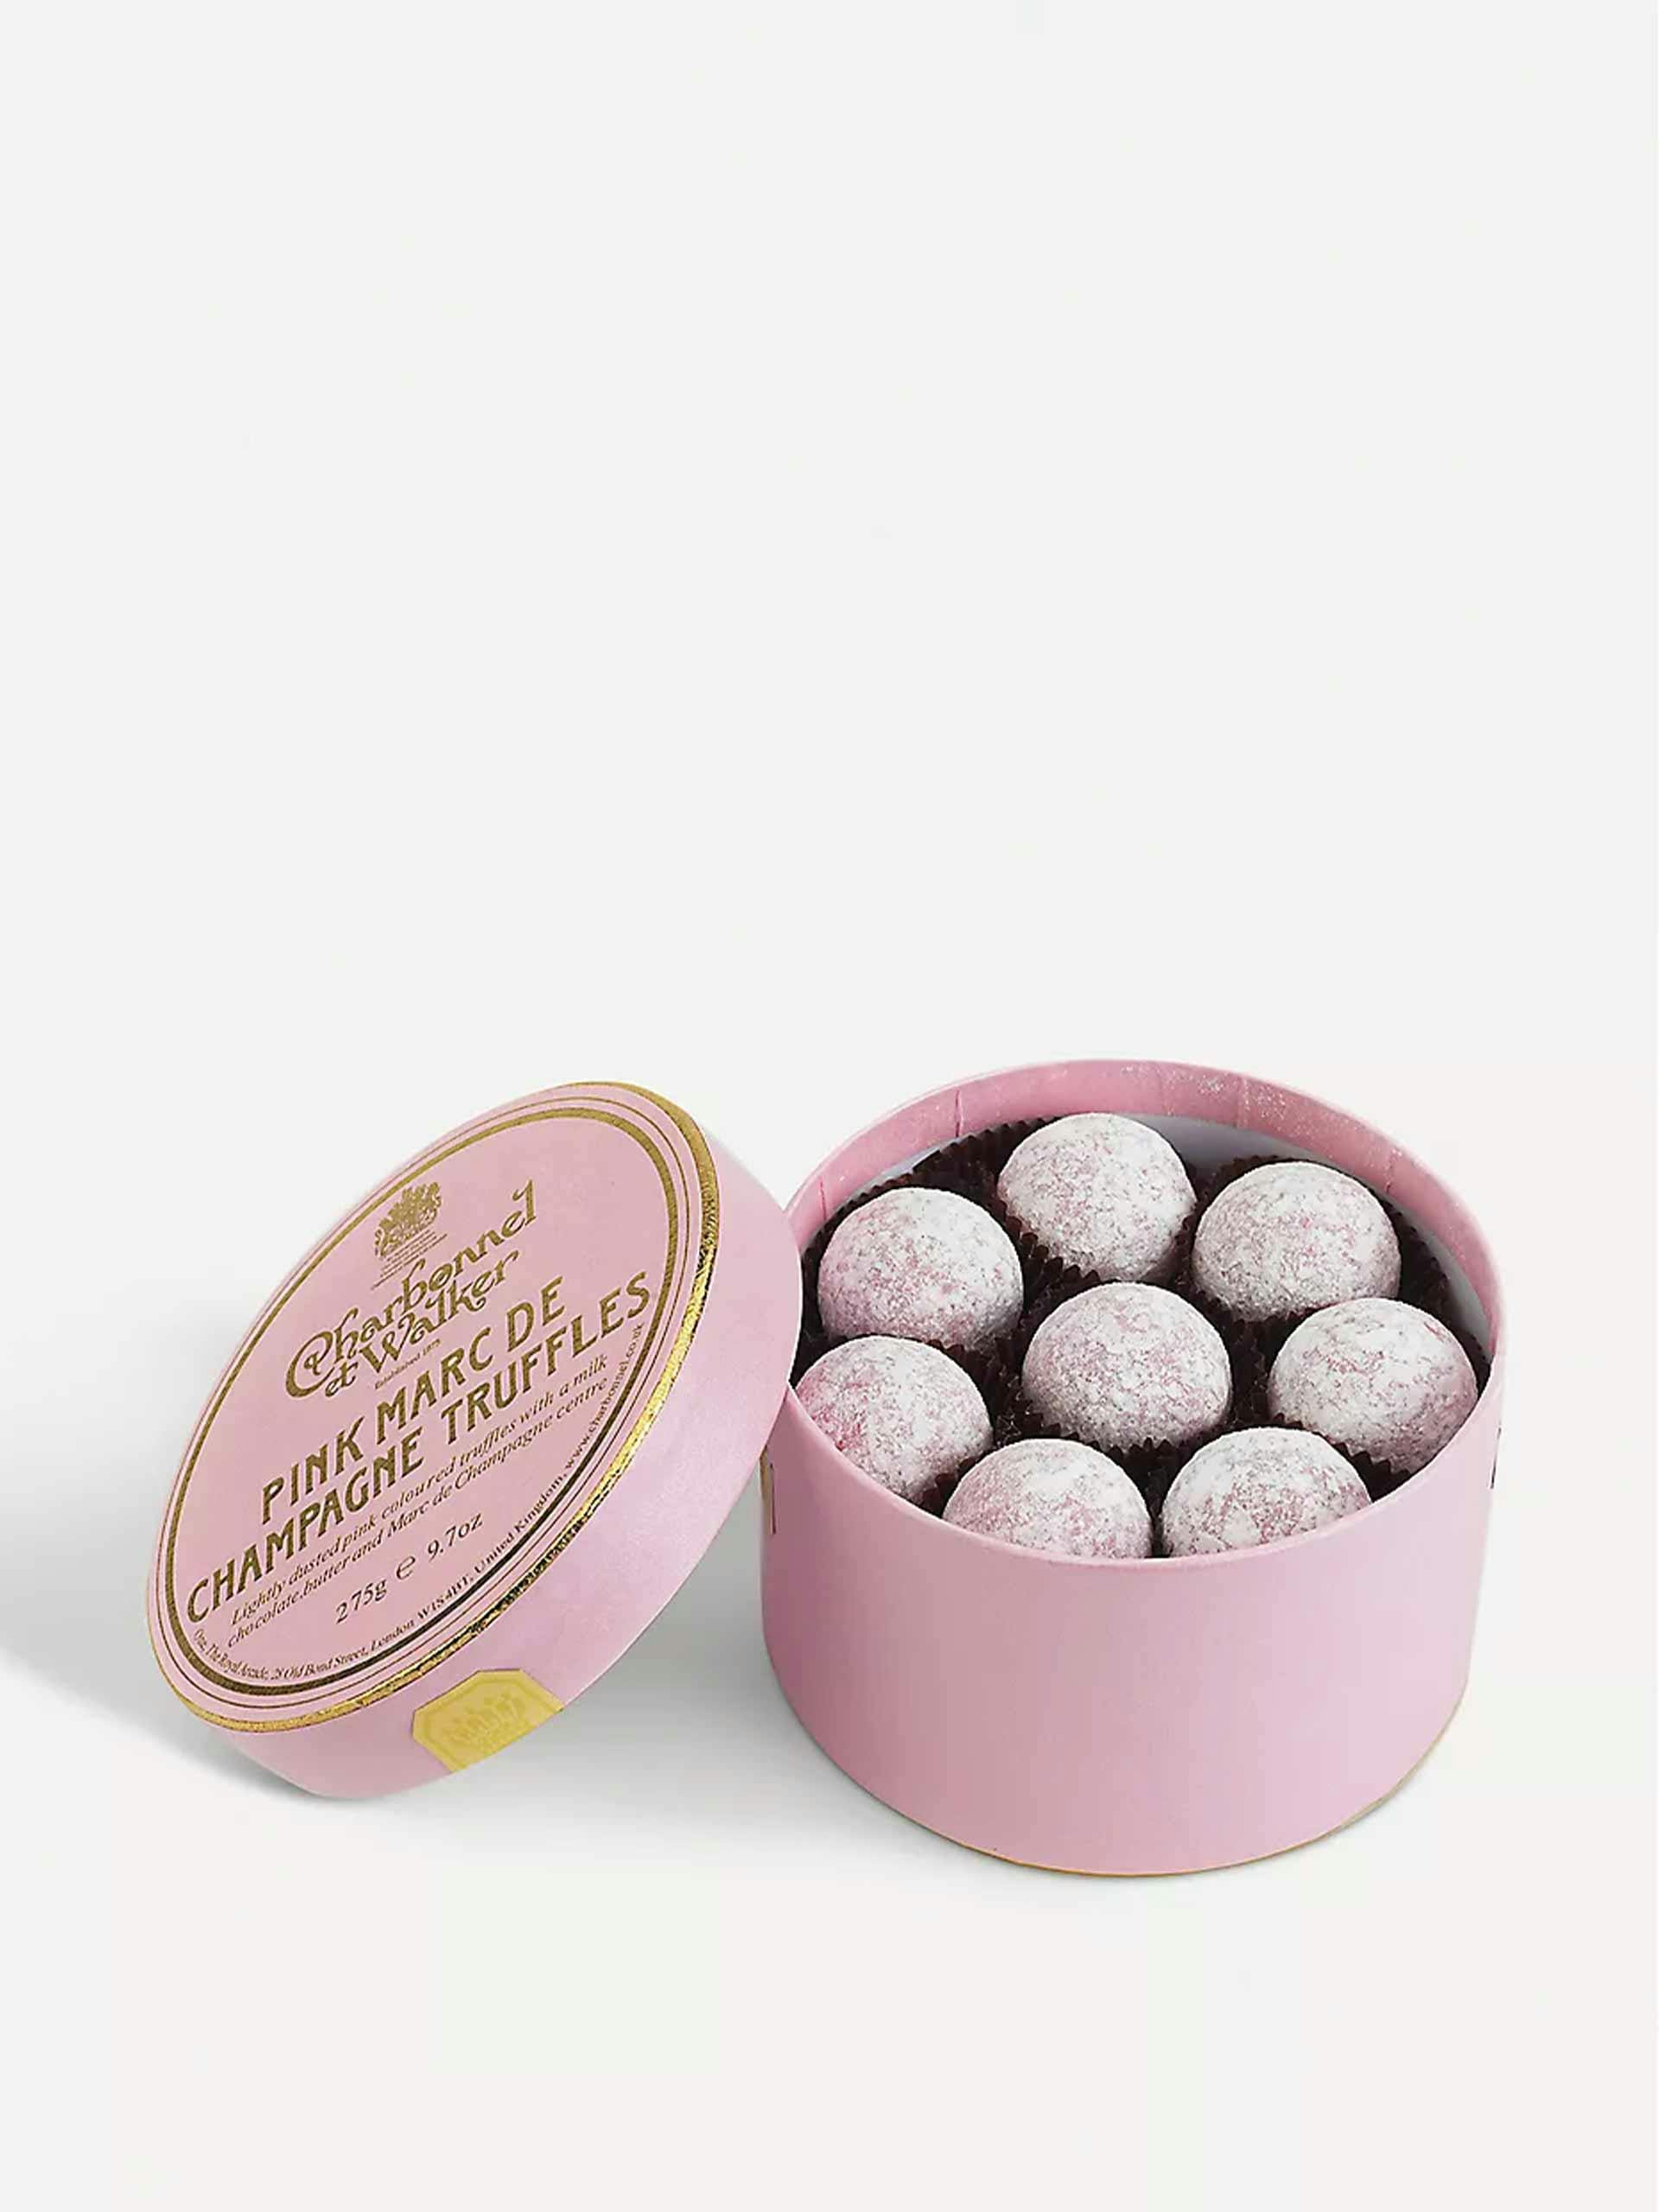 Pink Marc de Champagne milk chocolate truffles